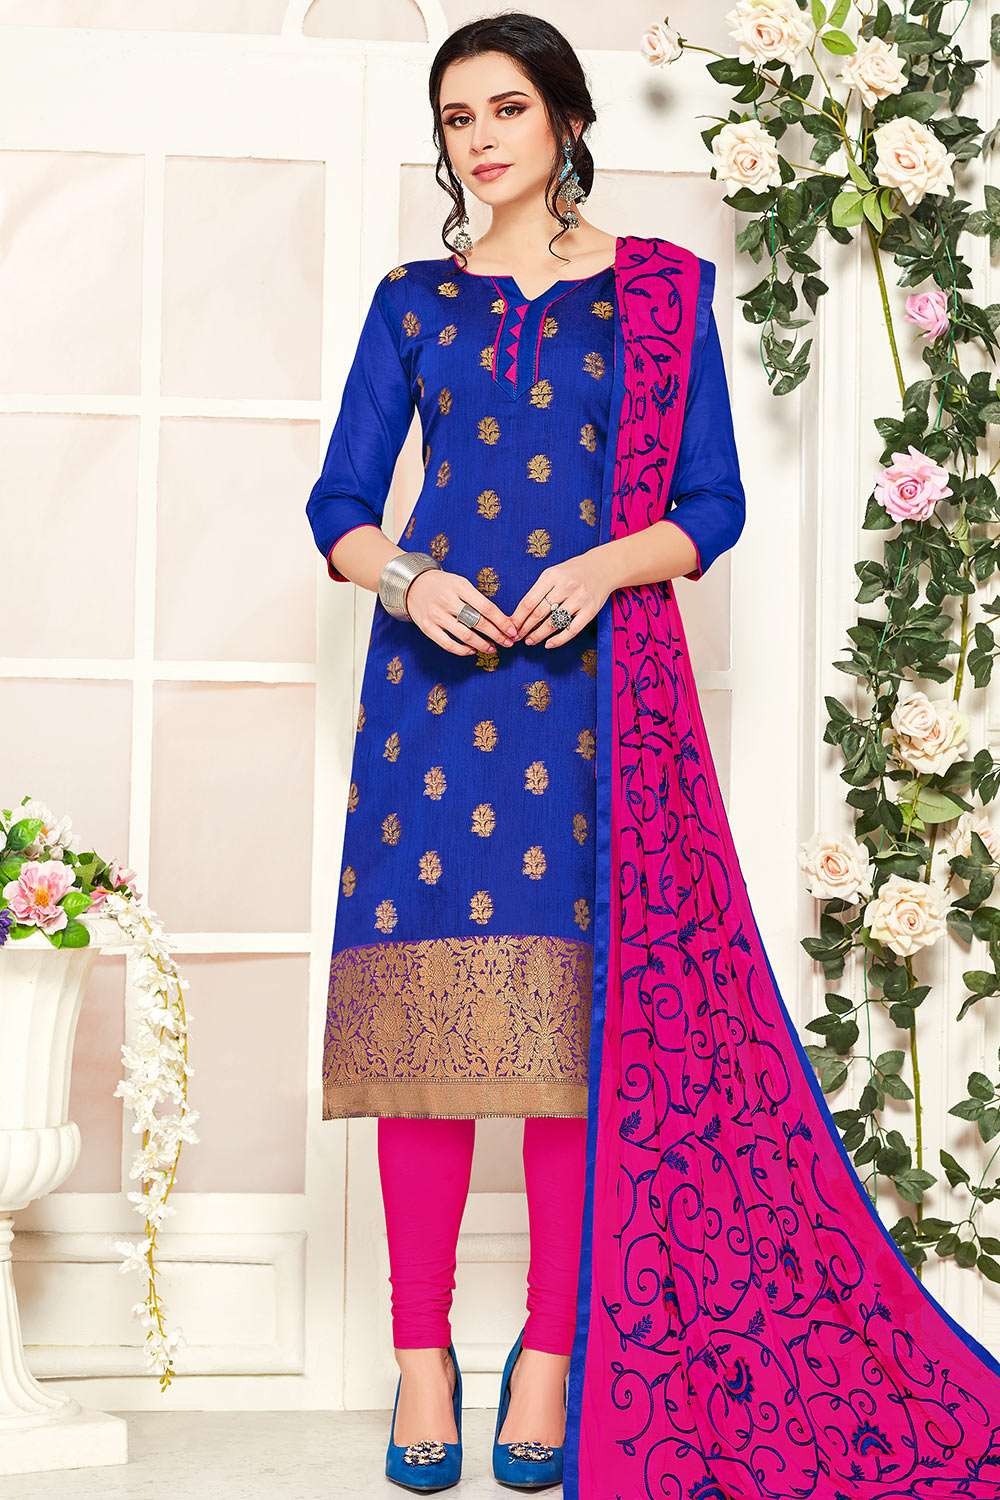 Discover 151+ royal salwar suit best